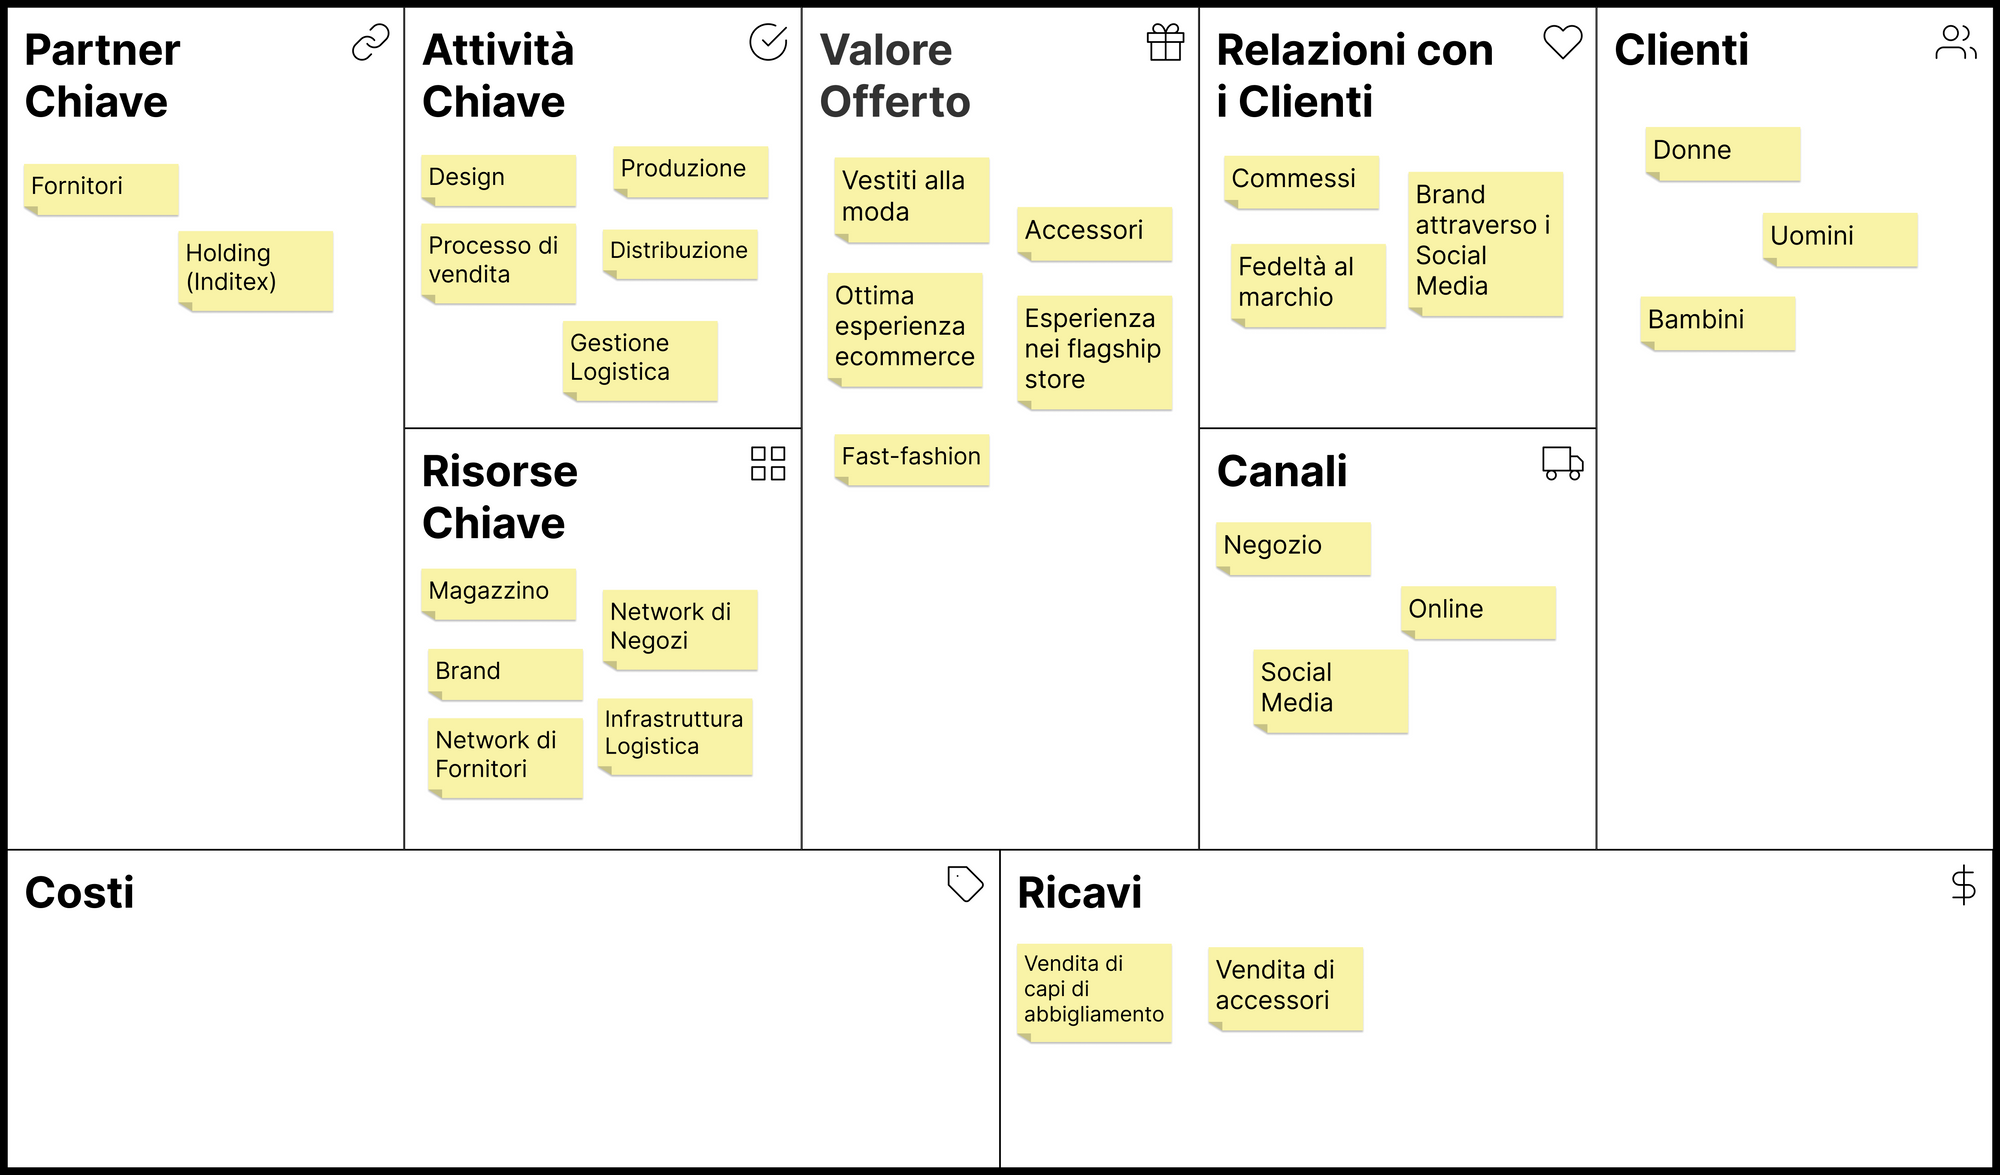 Business Model Canvas - Partner Chiave